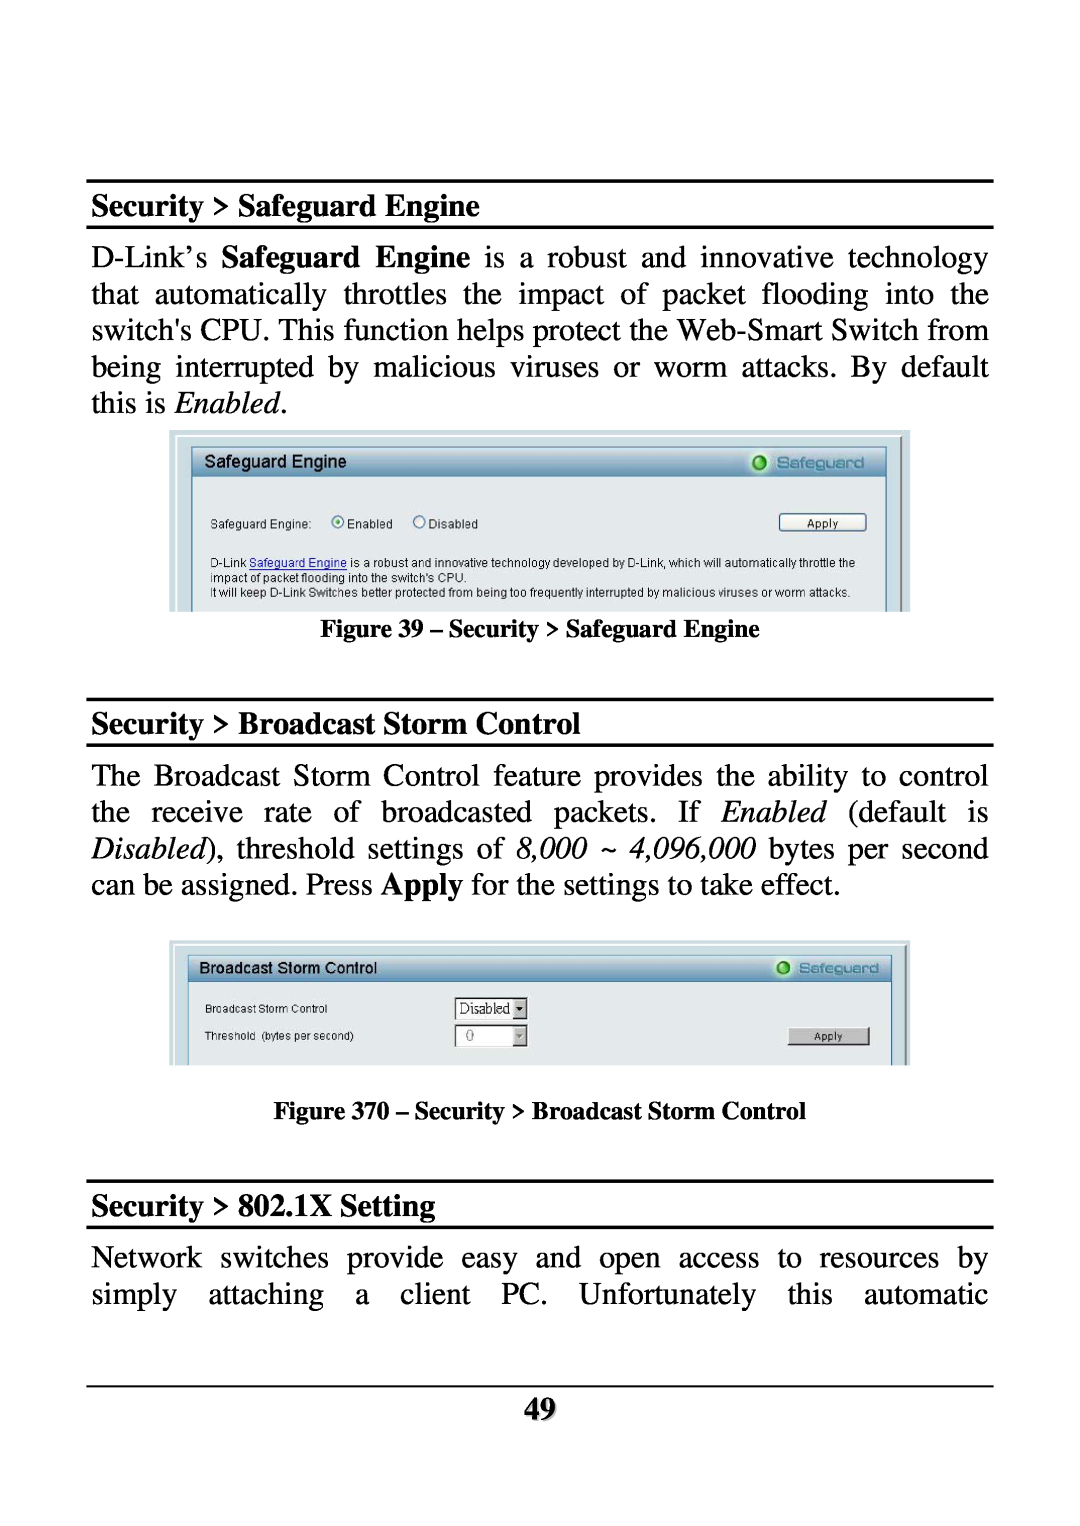 D-Link DES-1228 user manual Security Safeguard Engine, Security Broadcast Storm Control, Security 802.1X Setting 